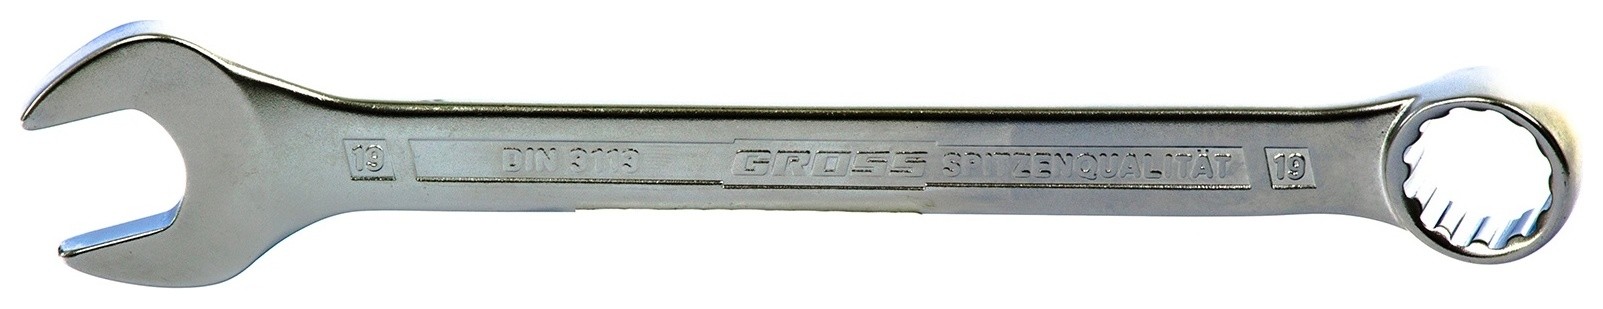 Ключ комбинированный 19 мм, Crv, холодный штамп